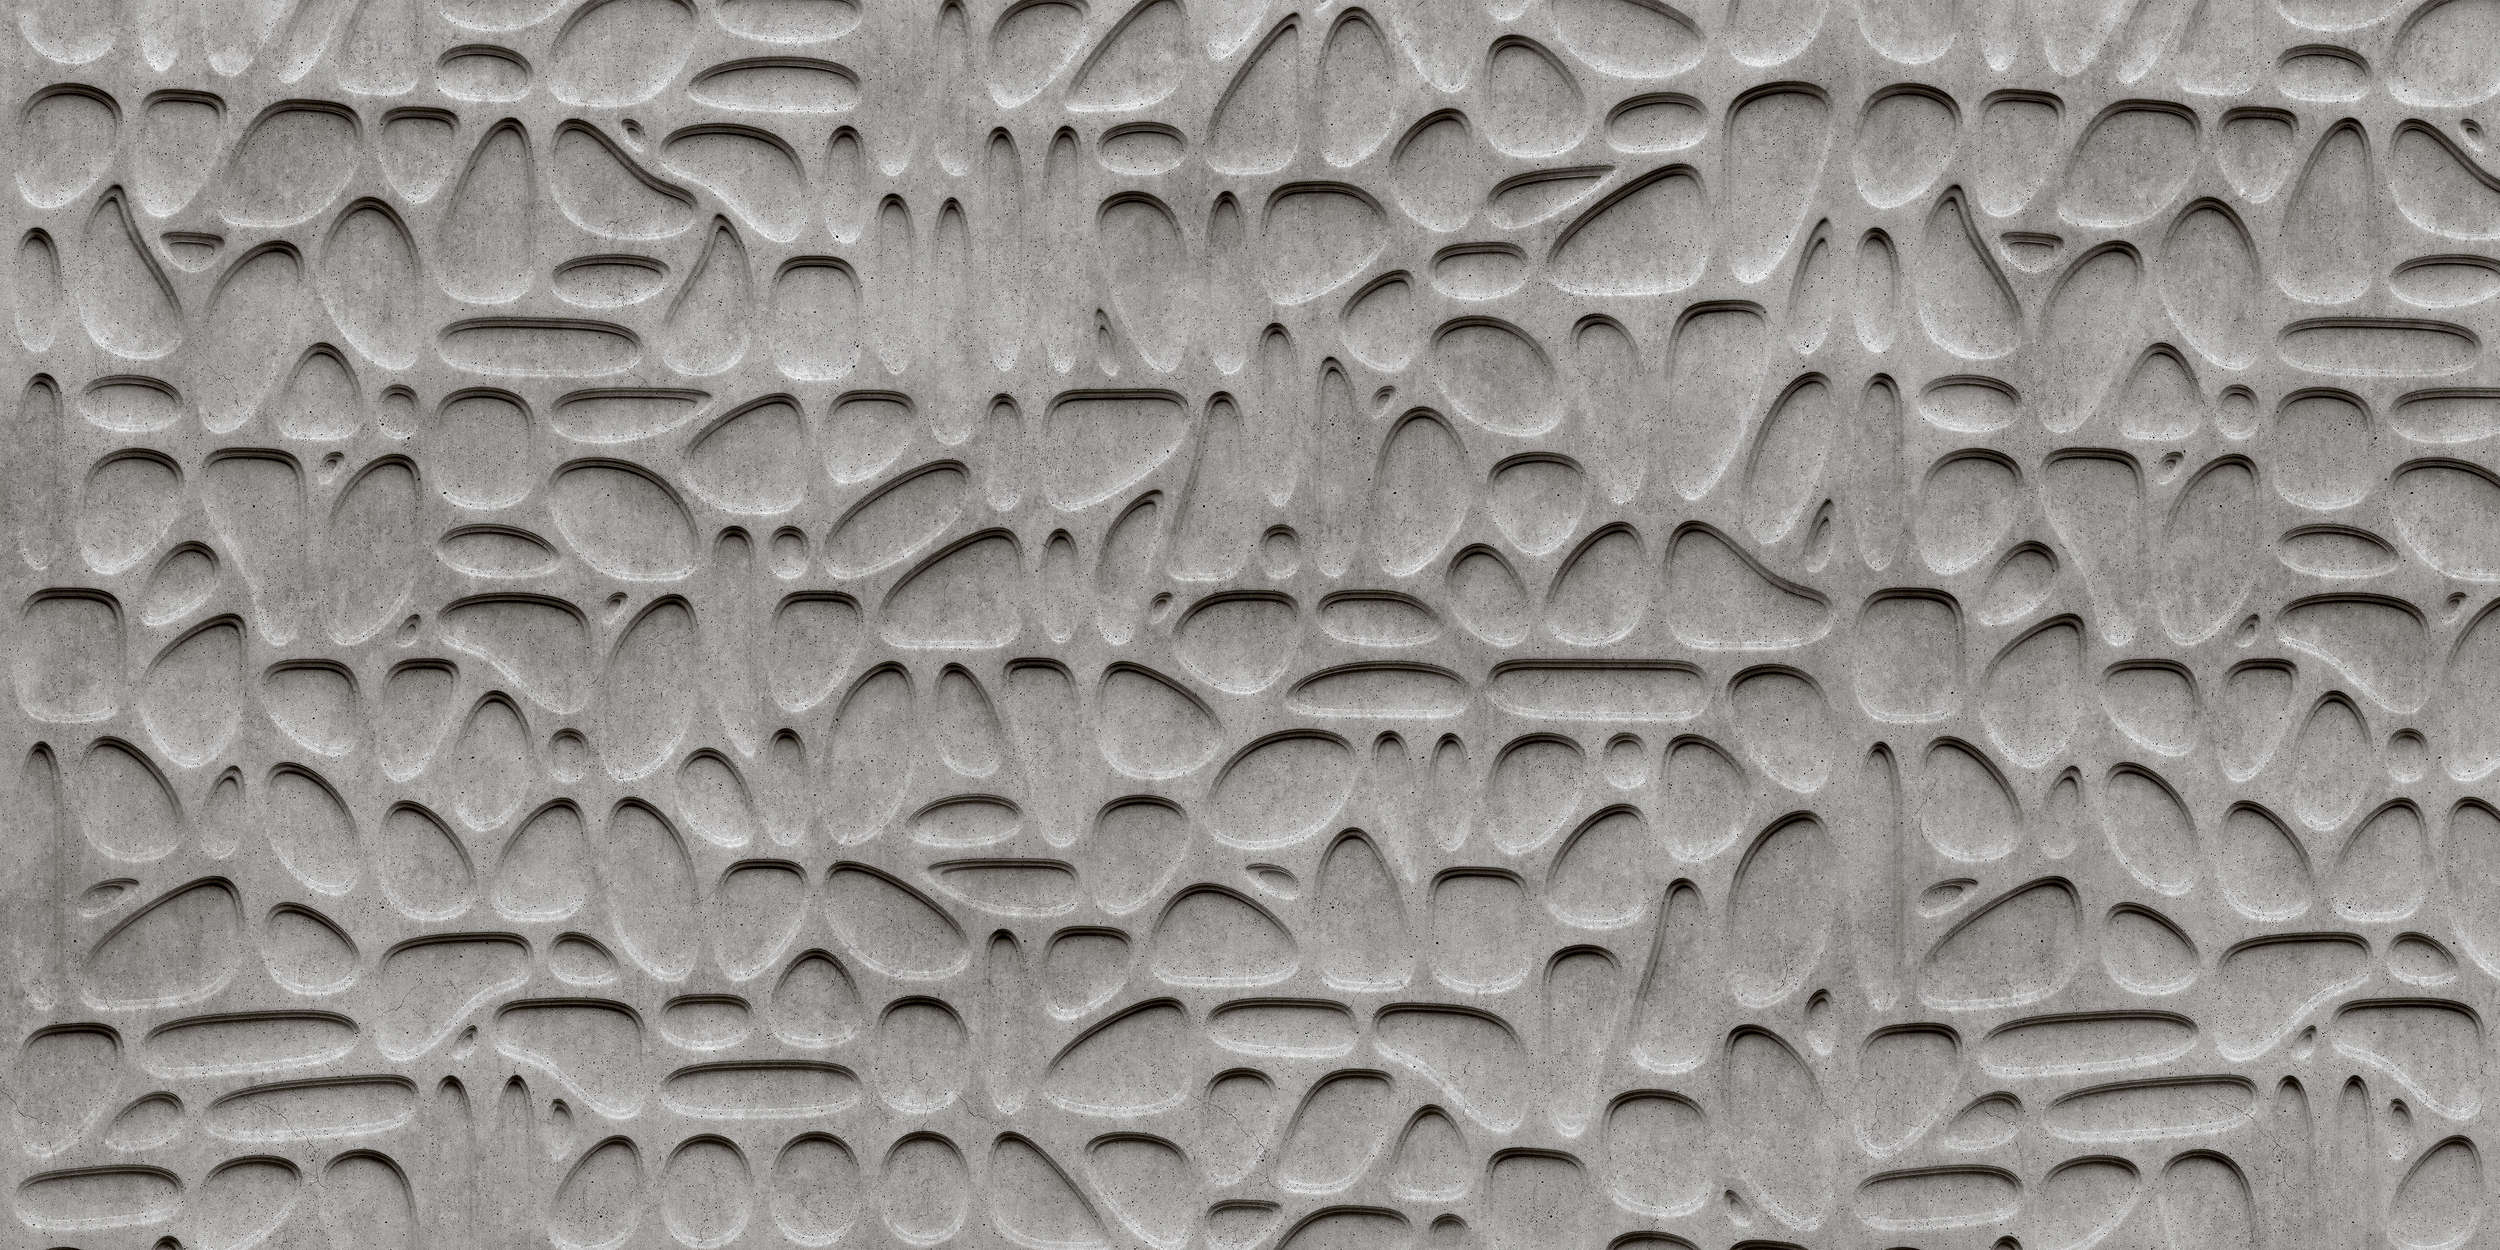             Maze 1 - Coole 3D Beton-Luftblasen Fototapete – Grau, Schwarz | Struktur Vlies
        